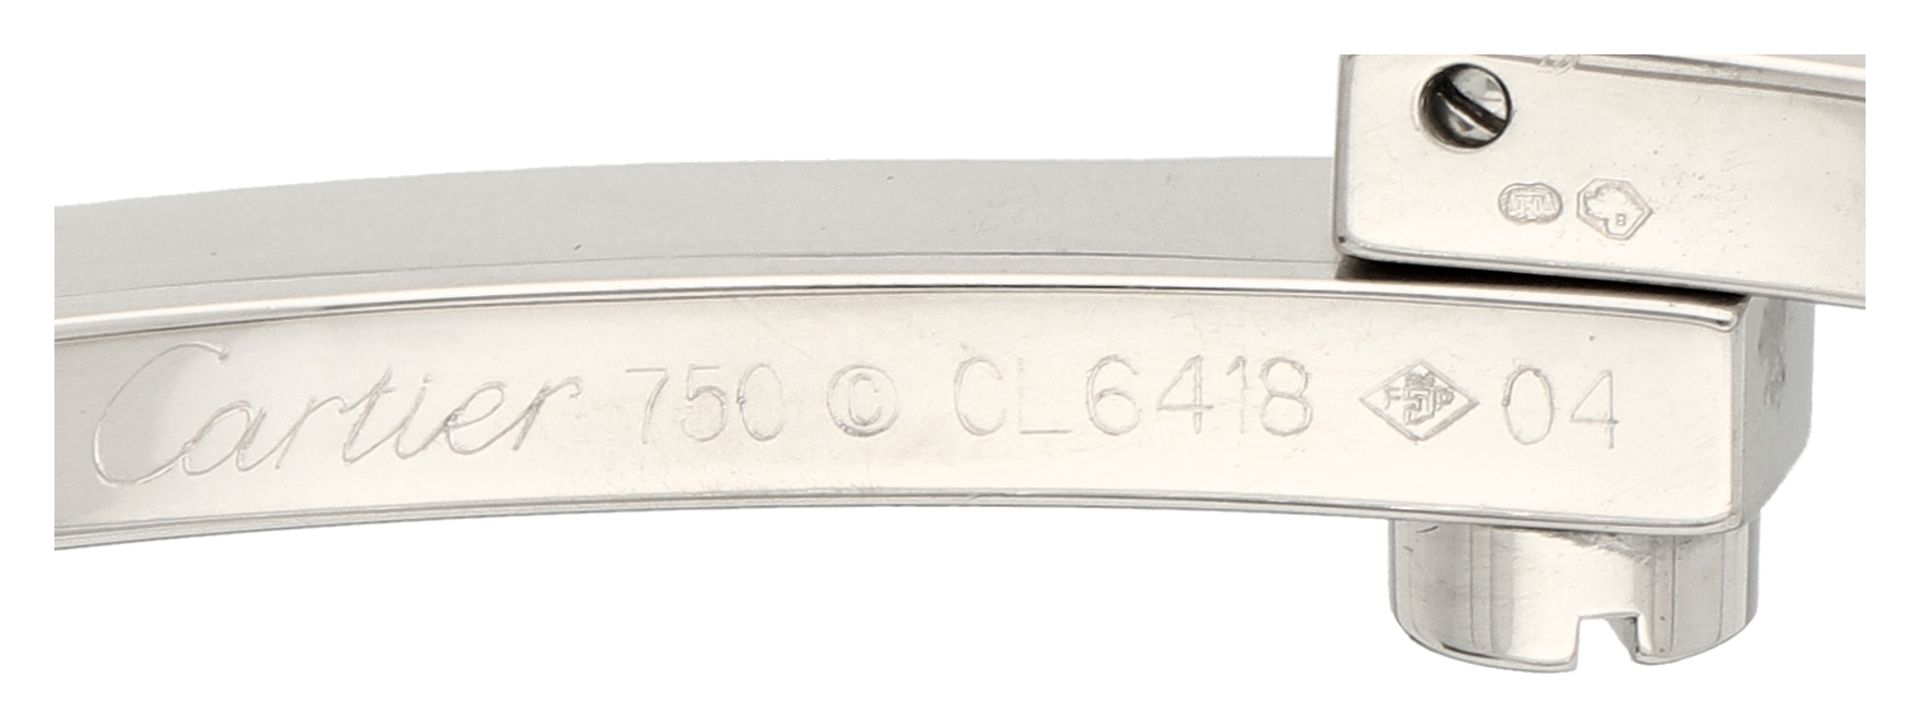 No Reserve - Cartier Menotte 18K white gold bracelet bangle and screwdriver. - Image 4 of 4